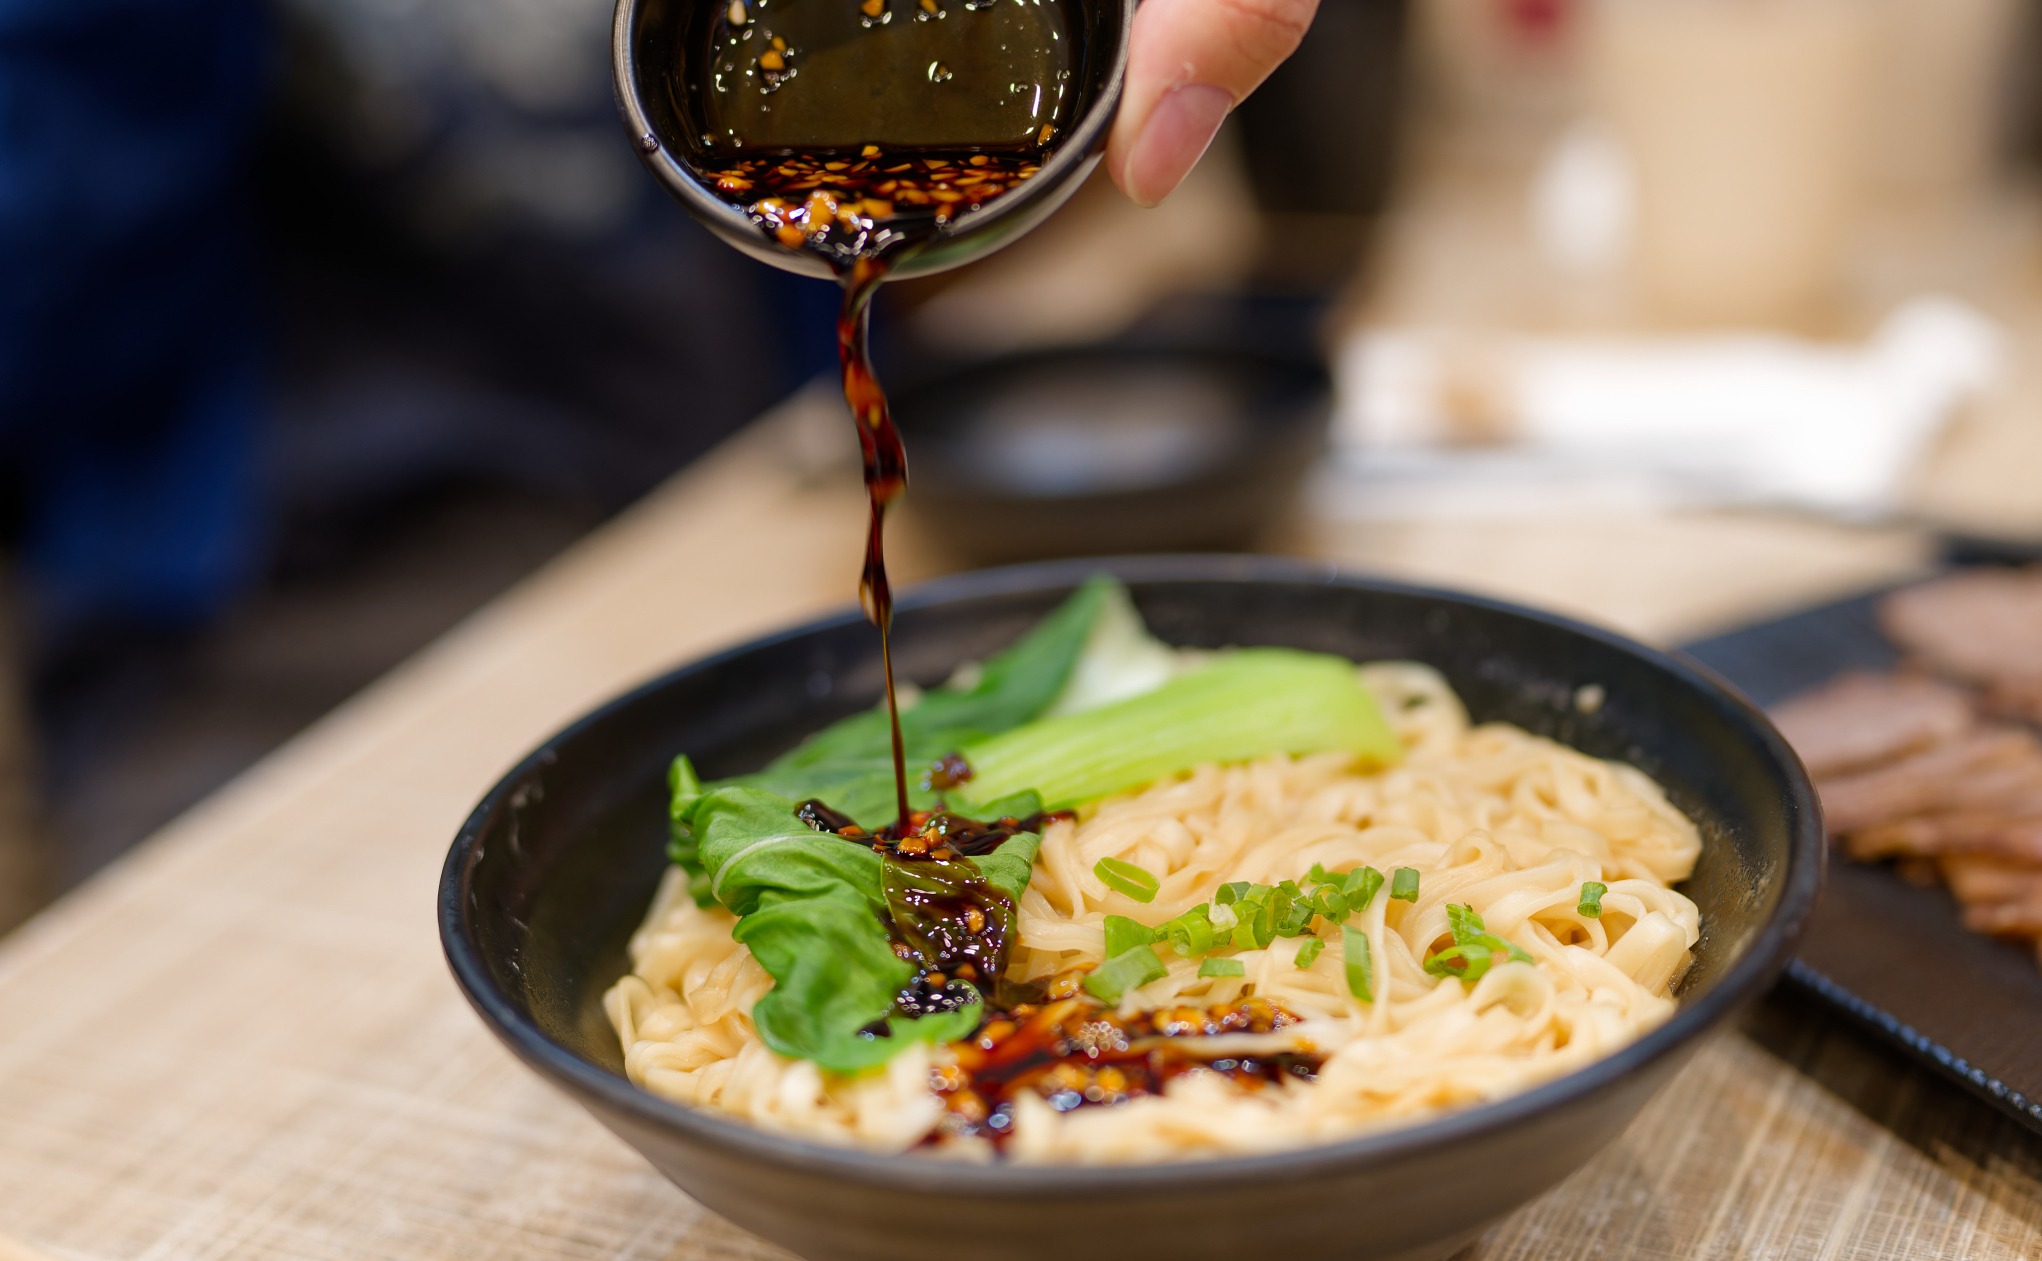 Fuzhou Dry Noodles - Fuzhou Dry Noodles